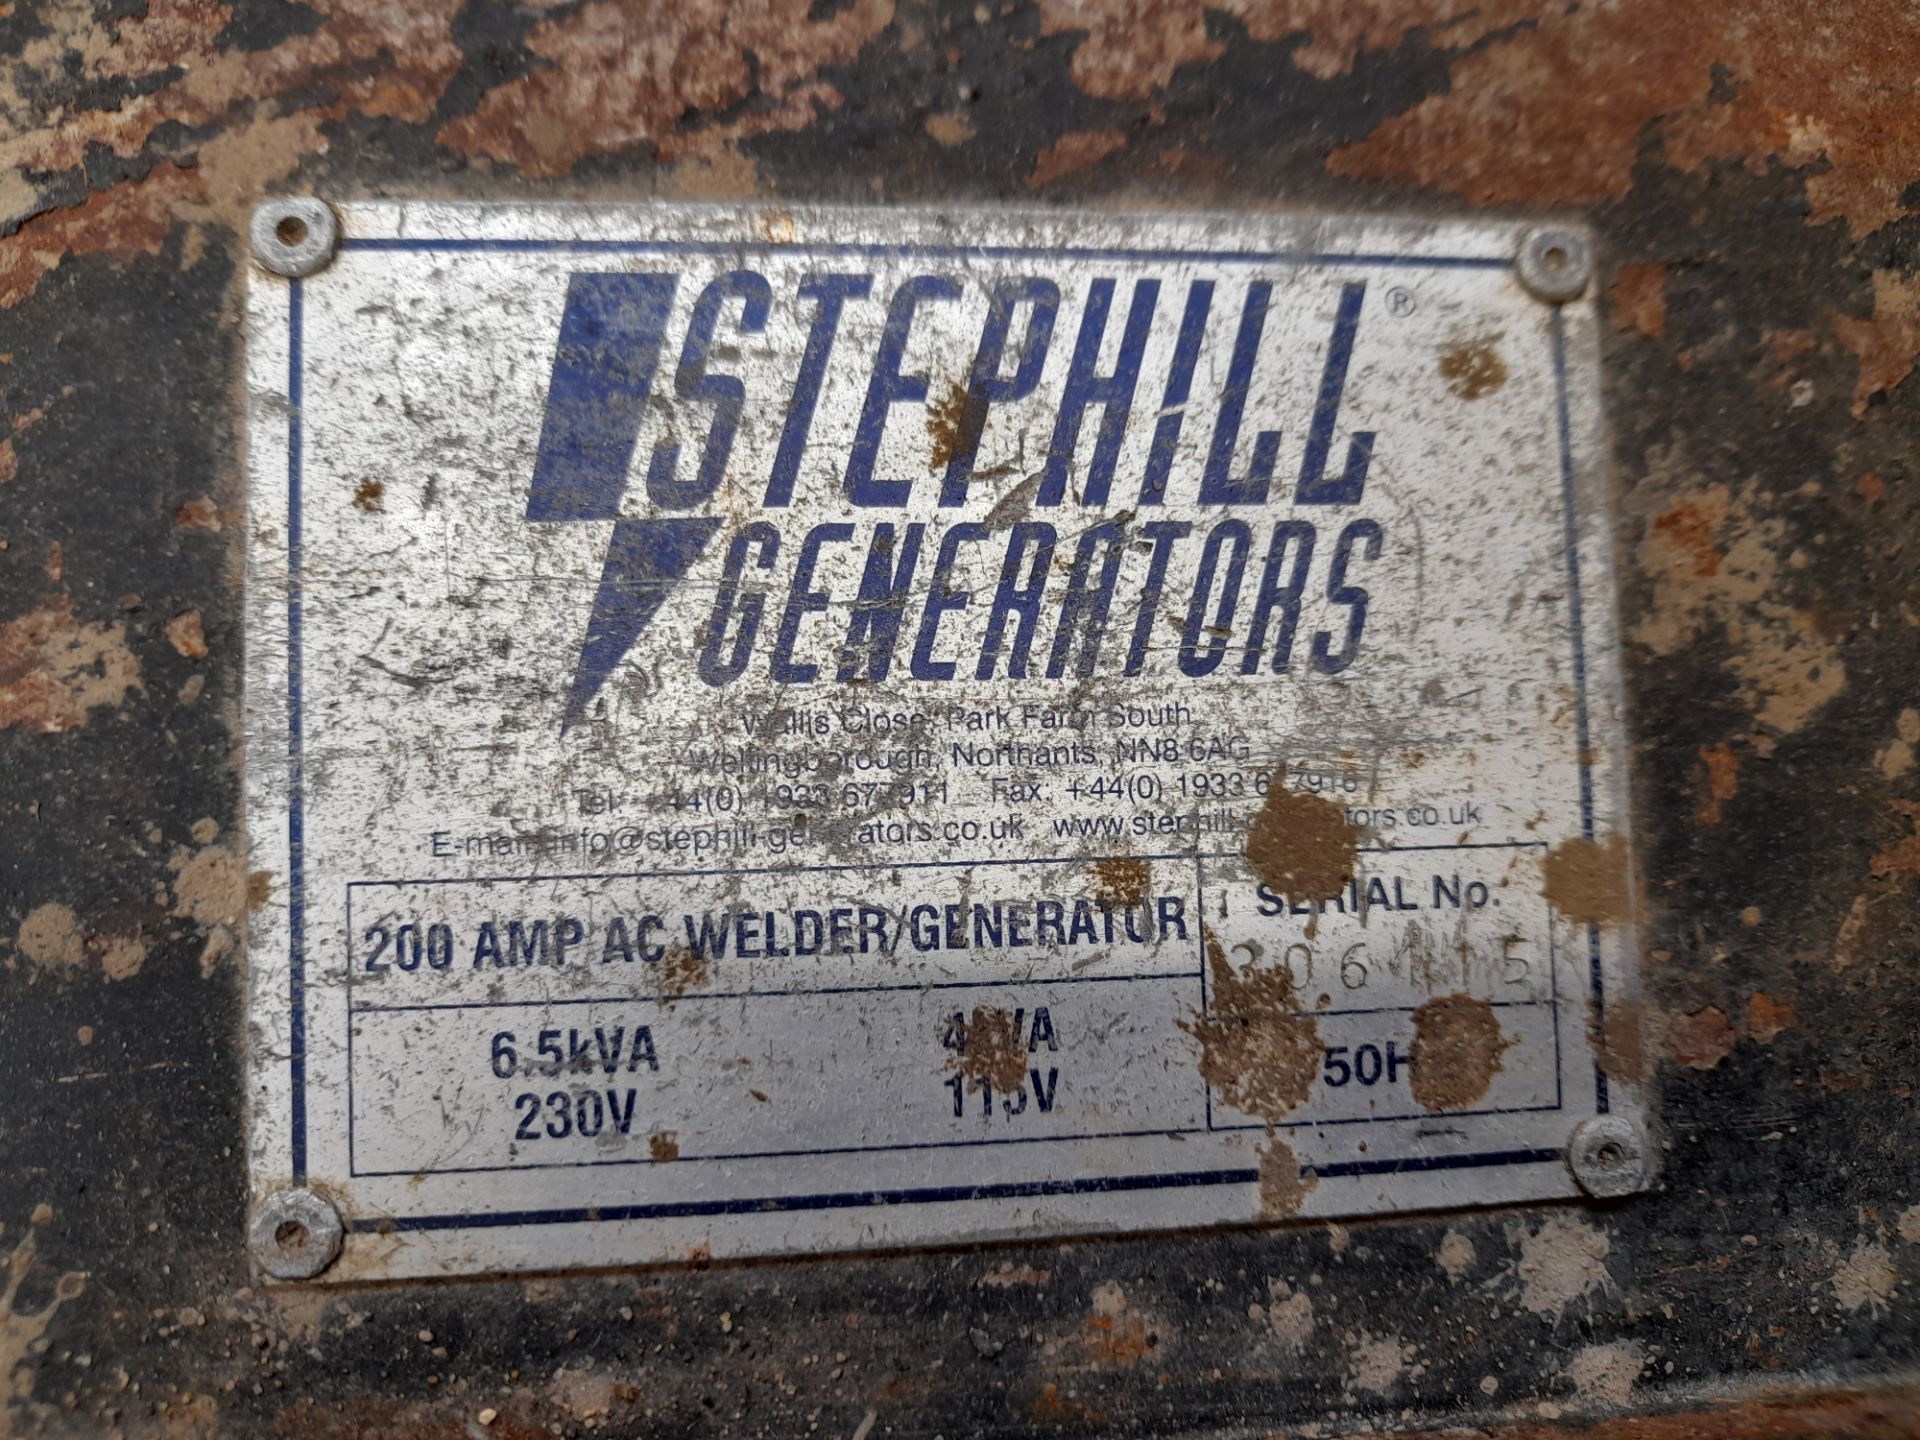 Stephill Generators 200 Amp 6.5kVA AC Mobile welder / generator - Image 2 of 3